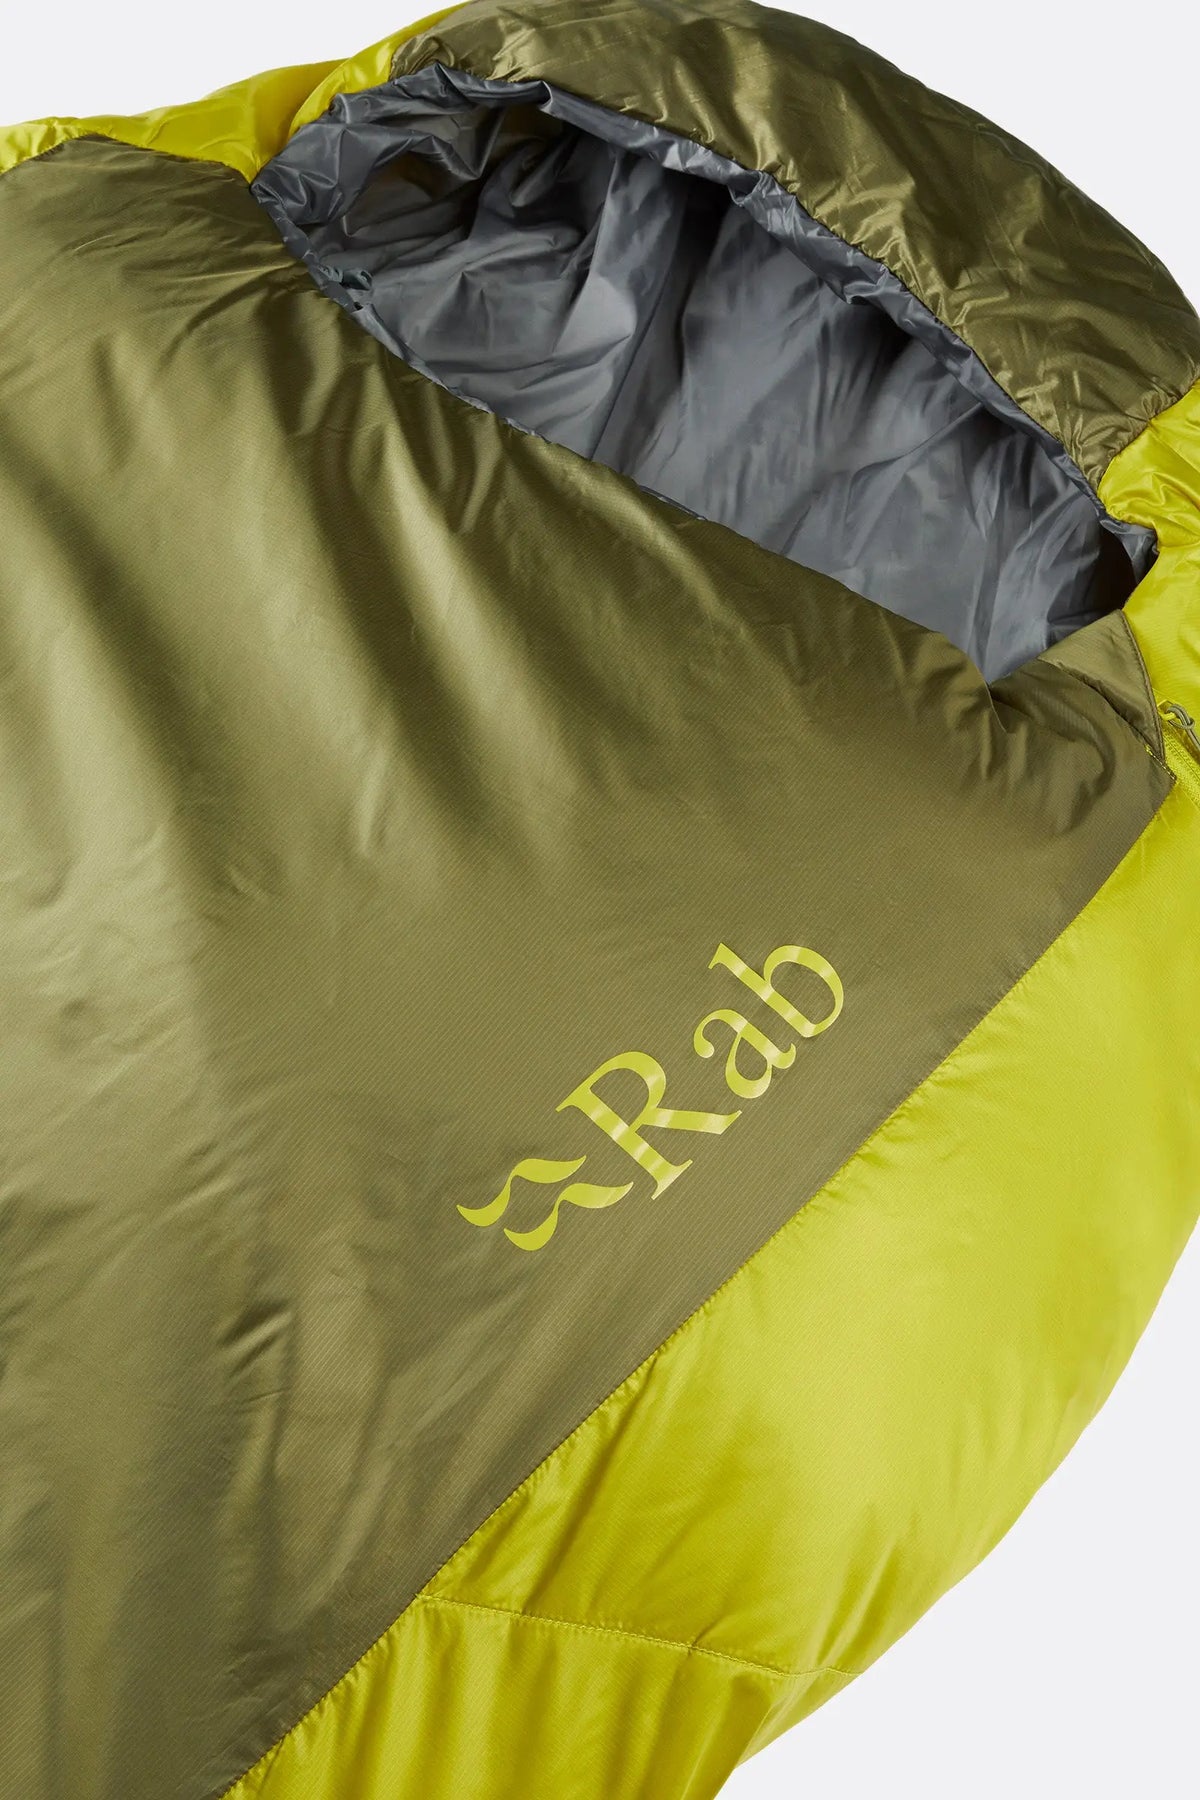 Rab Solar Eco 0 Sleeping Bag (5C)